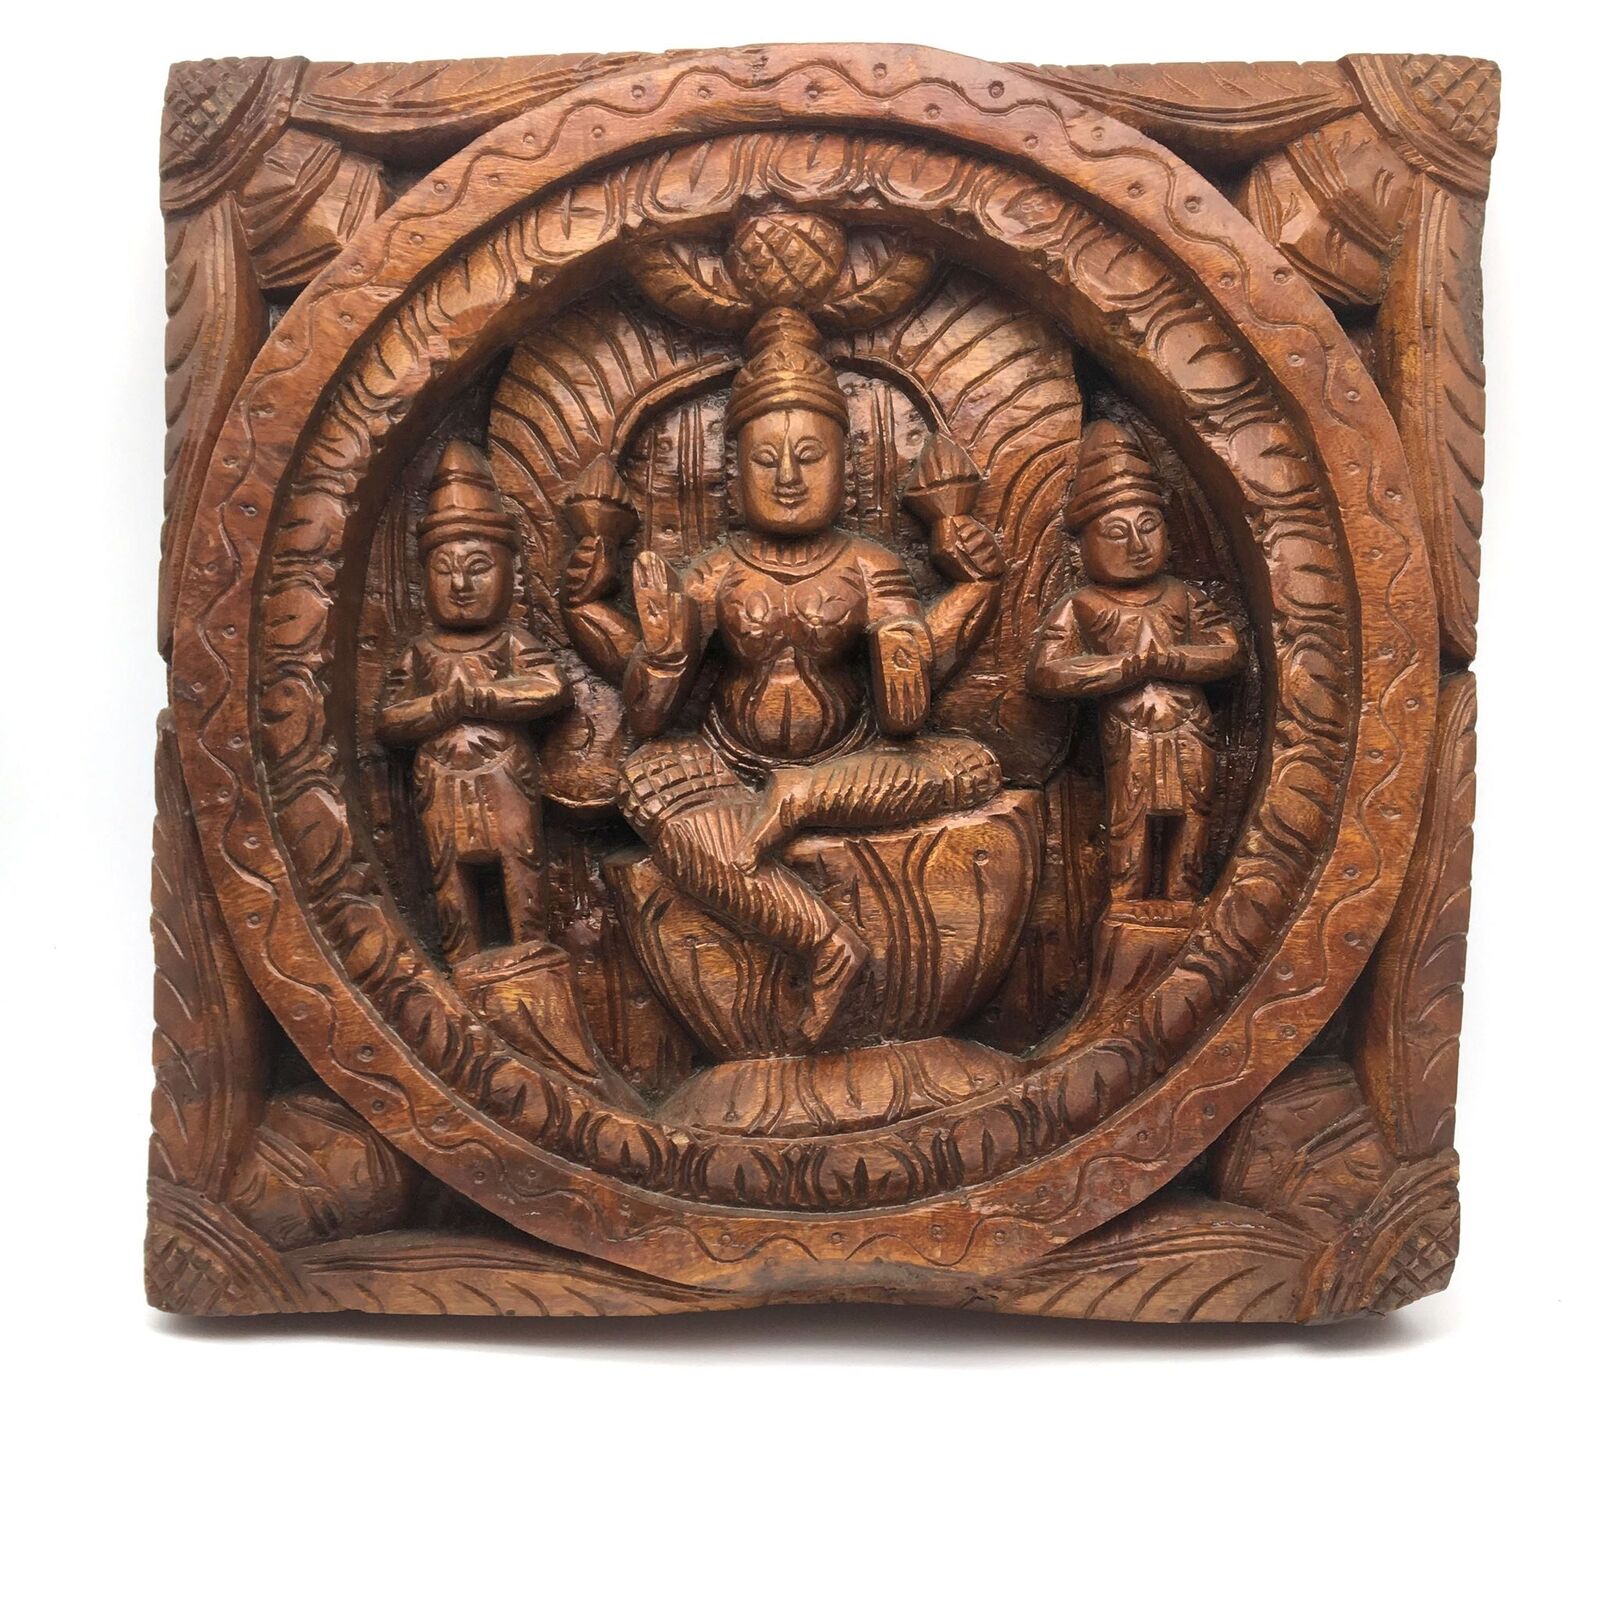 Hand-carved Solid Wood Carved Mata Maa Lakshmi Hindu Goddess of Fortune Idol 11.